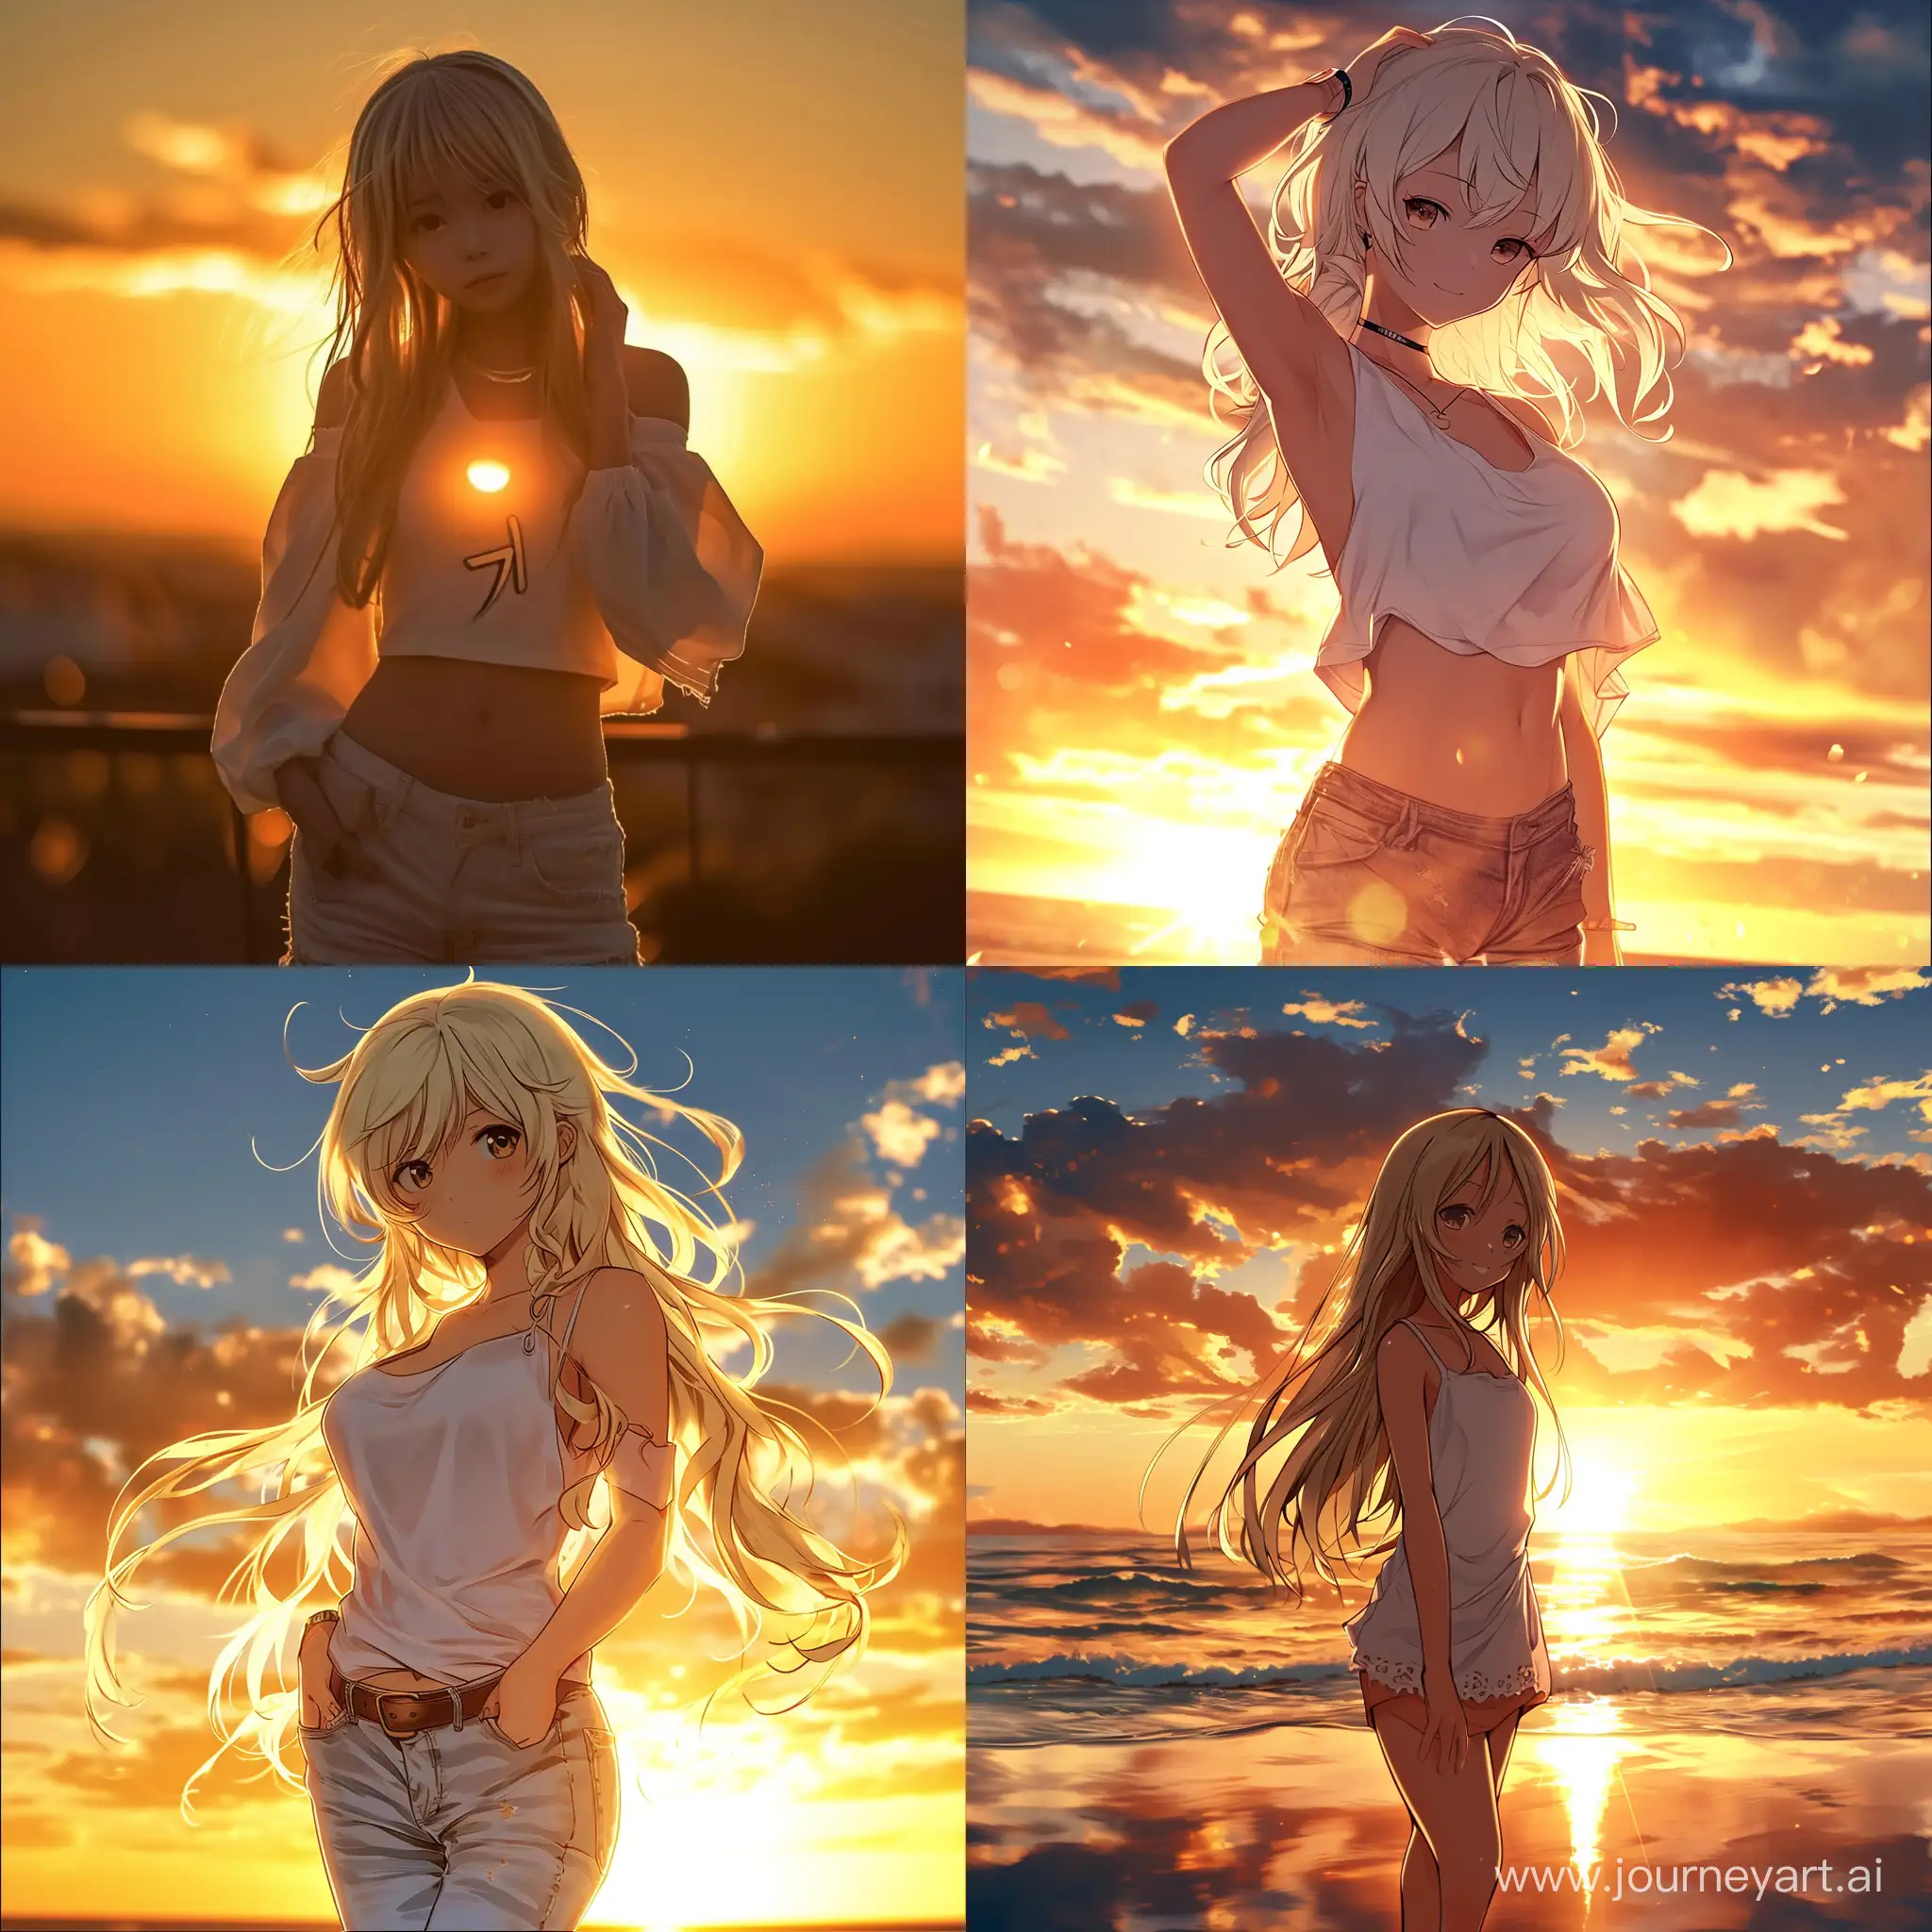 Graceful-Anime-Girl-in-Light-Clothing-at-Sunset